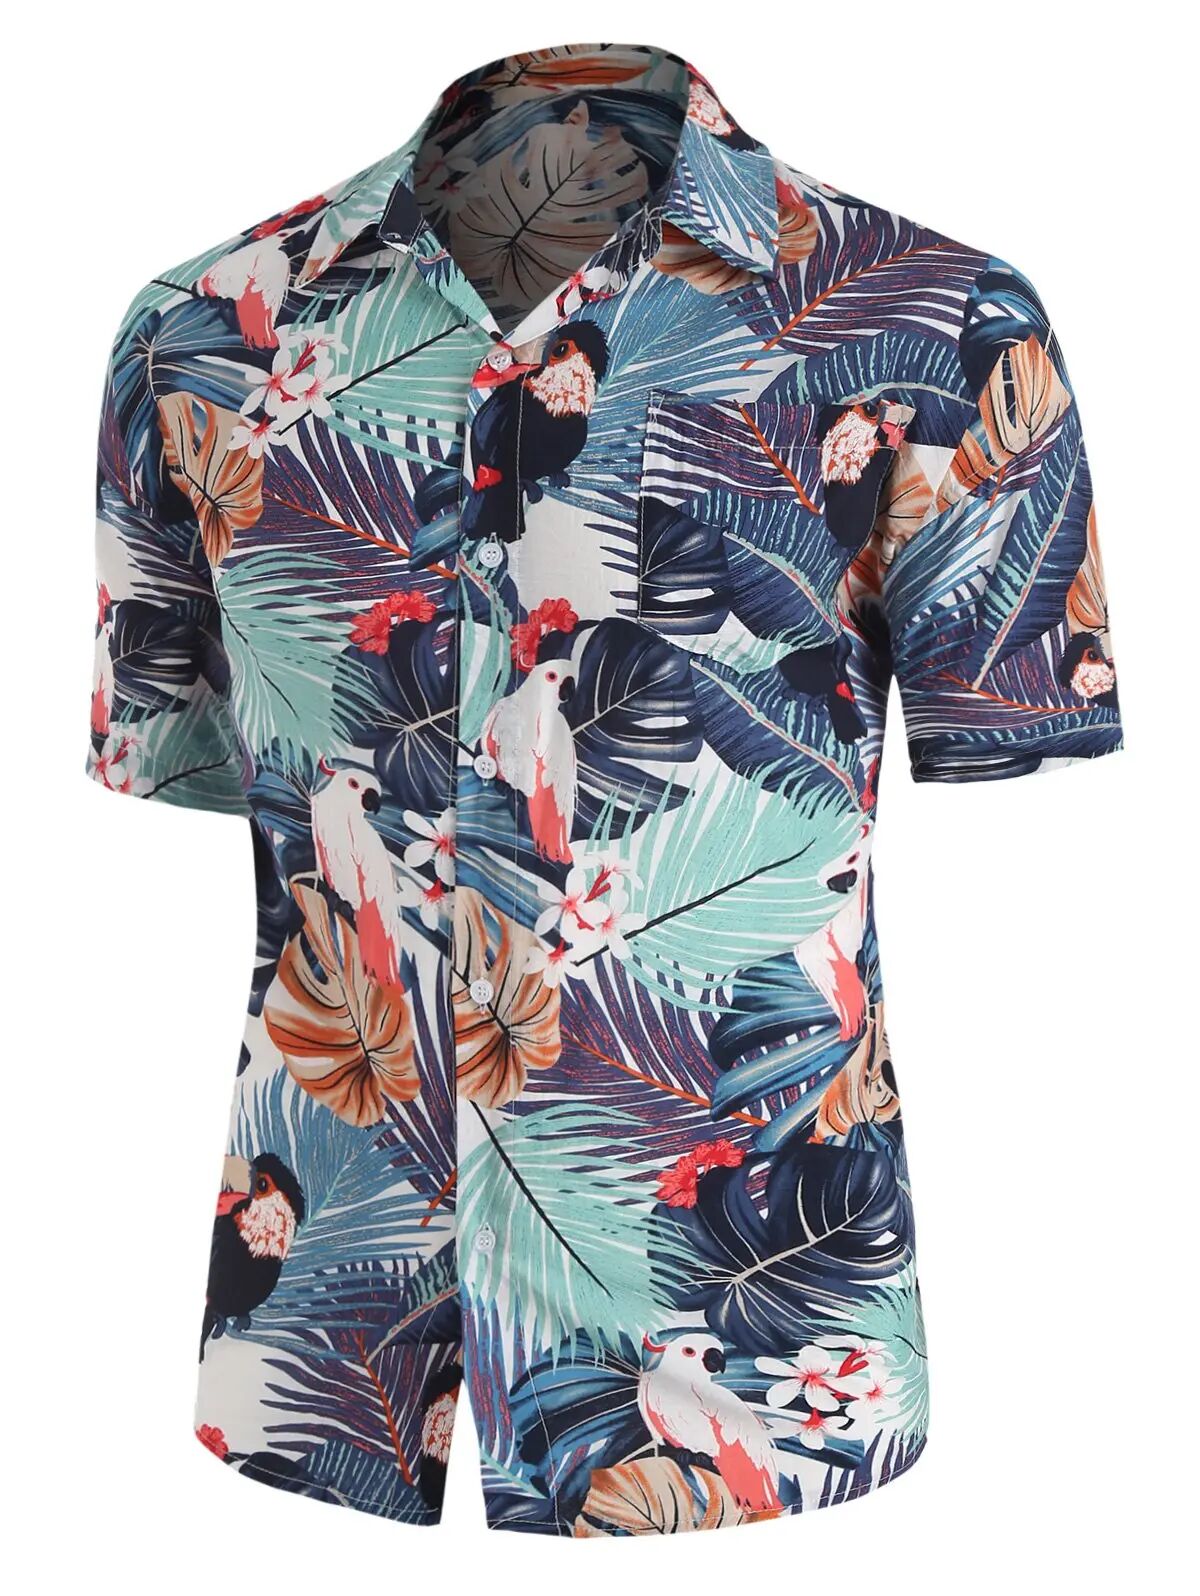 Clothing Online Pocket Rainforest Print Short Sleeves T-Shirt 3xl Cadetblue